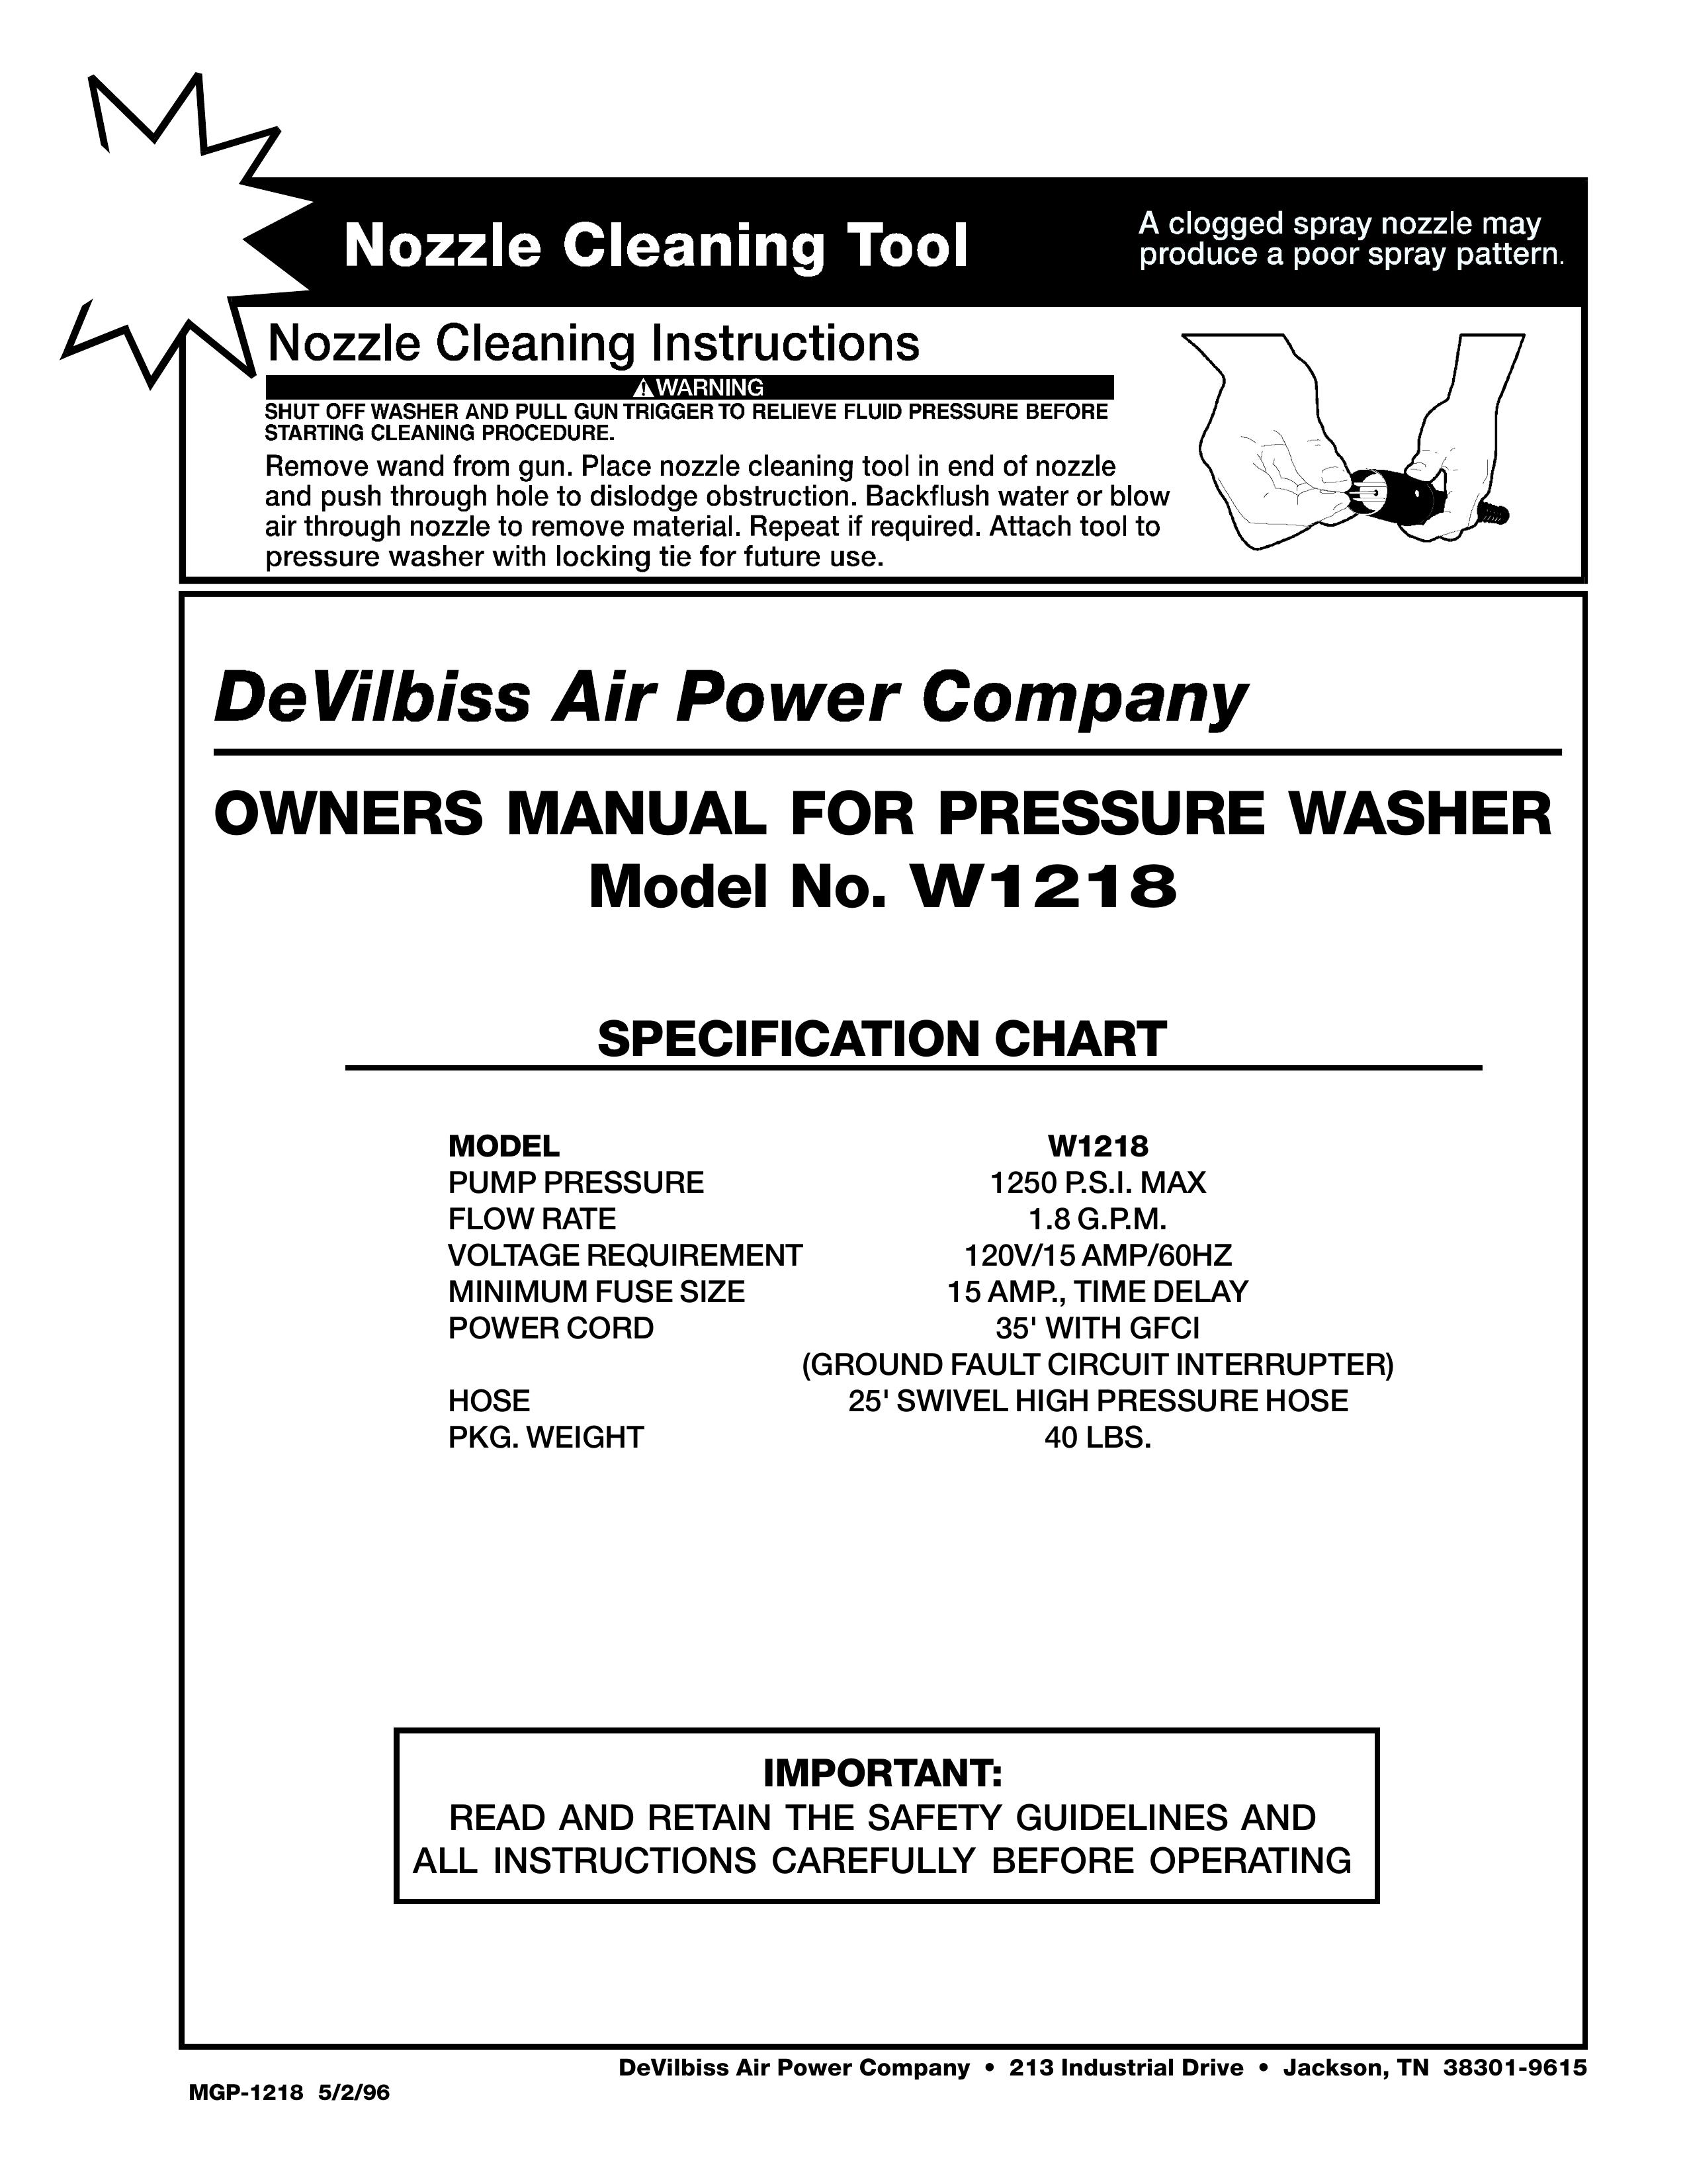 DeVillbiss Air Power Company W1218 Pressure Washer User Manual